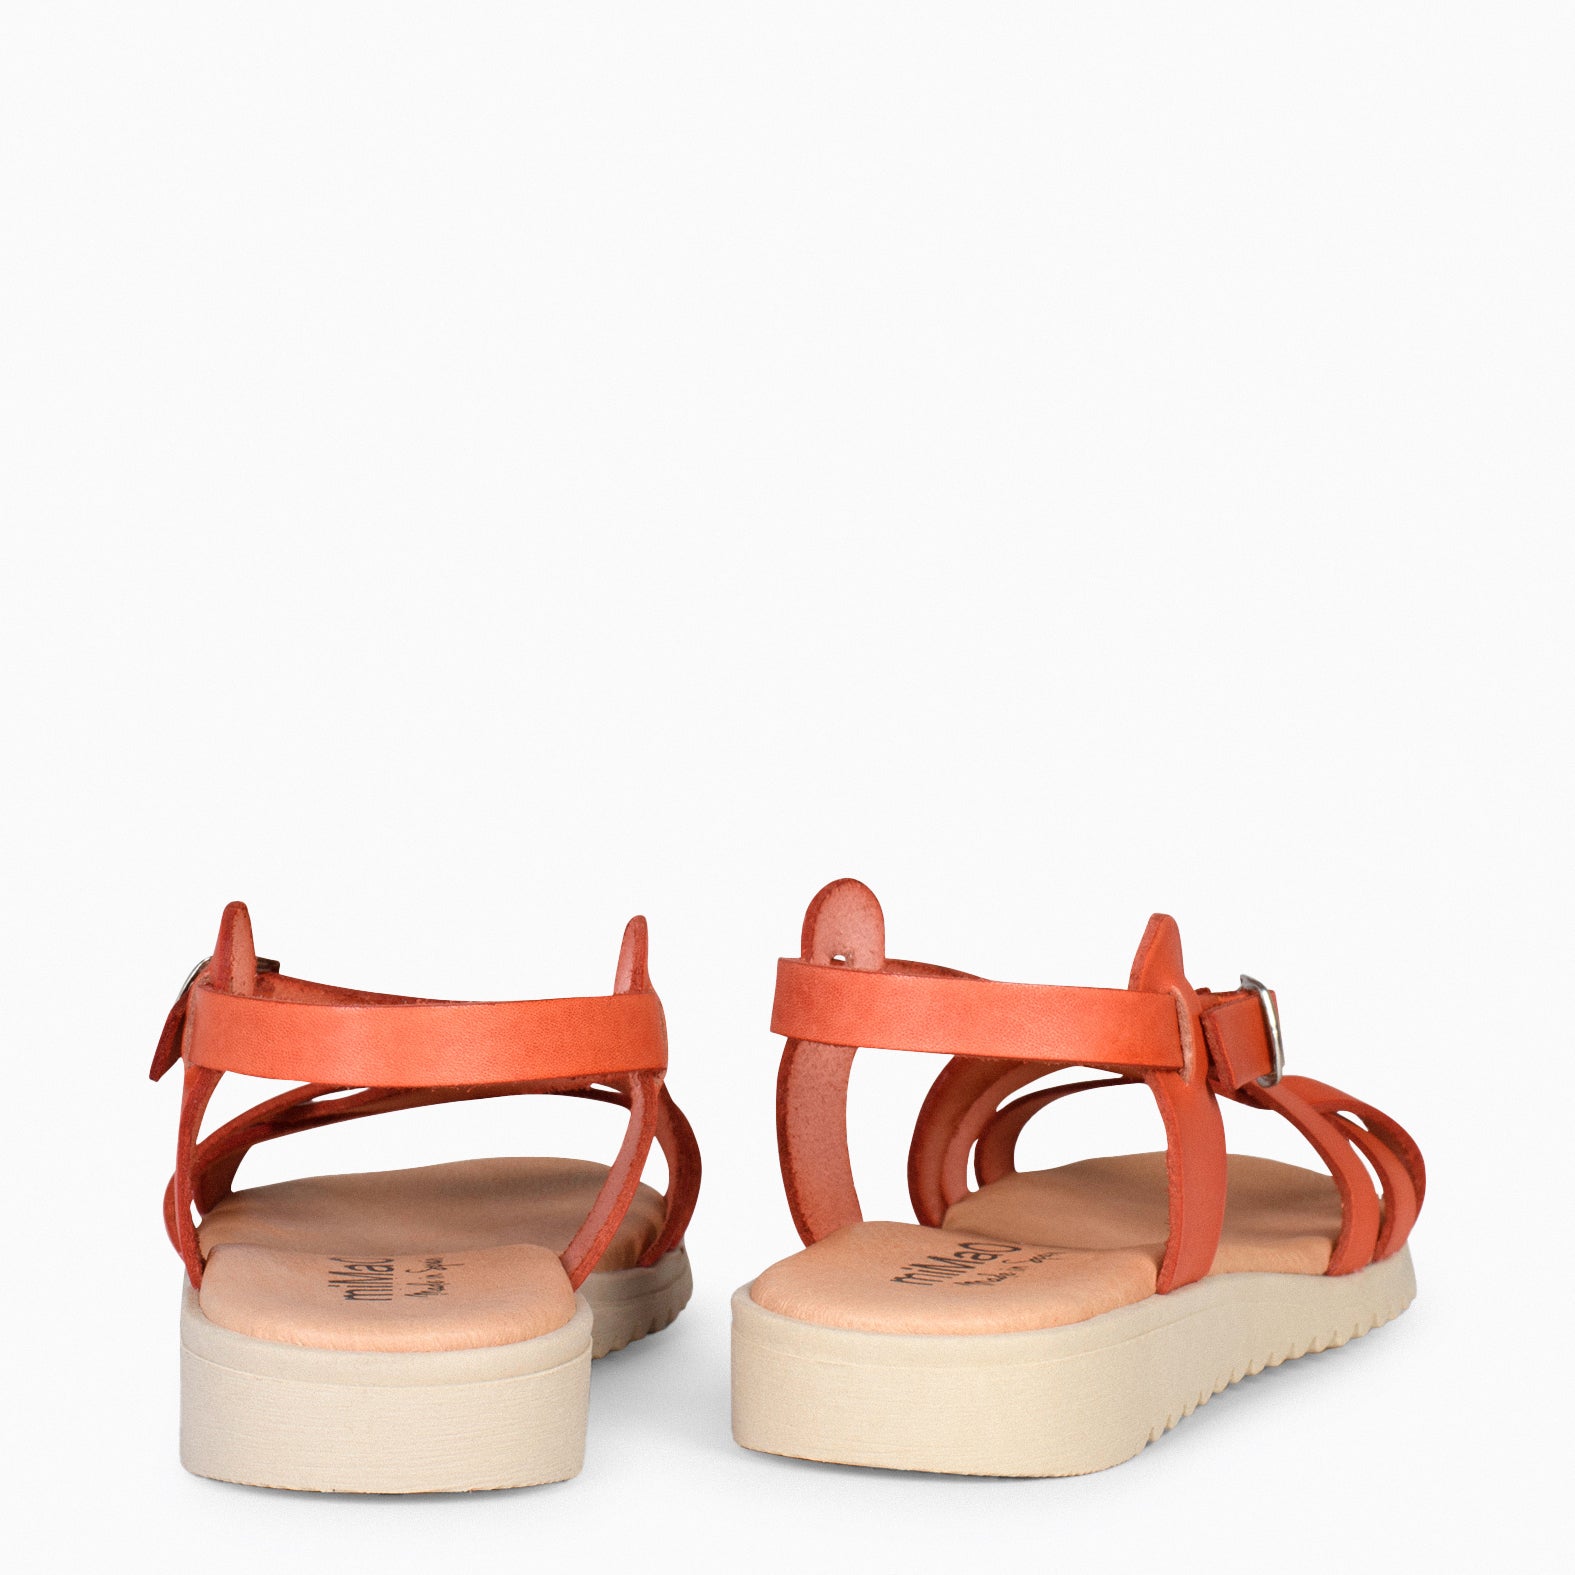 SPIRIT – ORANGE Flat sandal with crossed strap